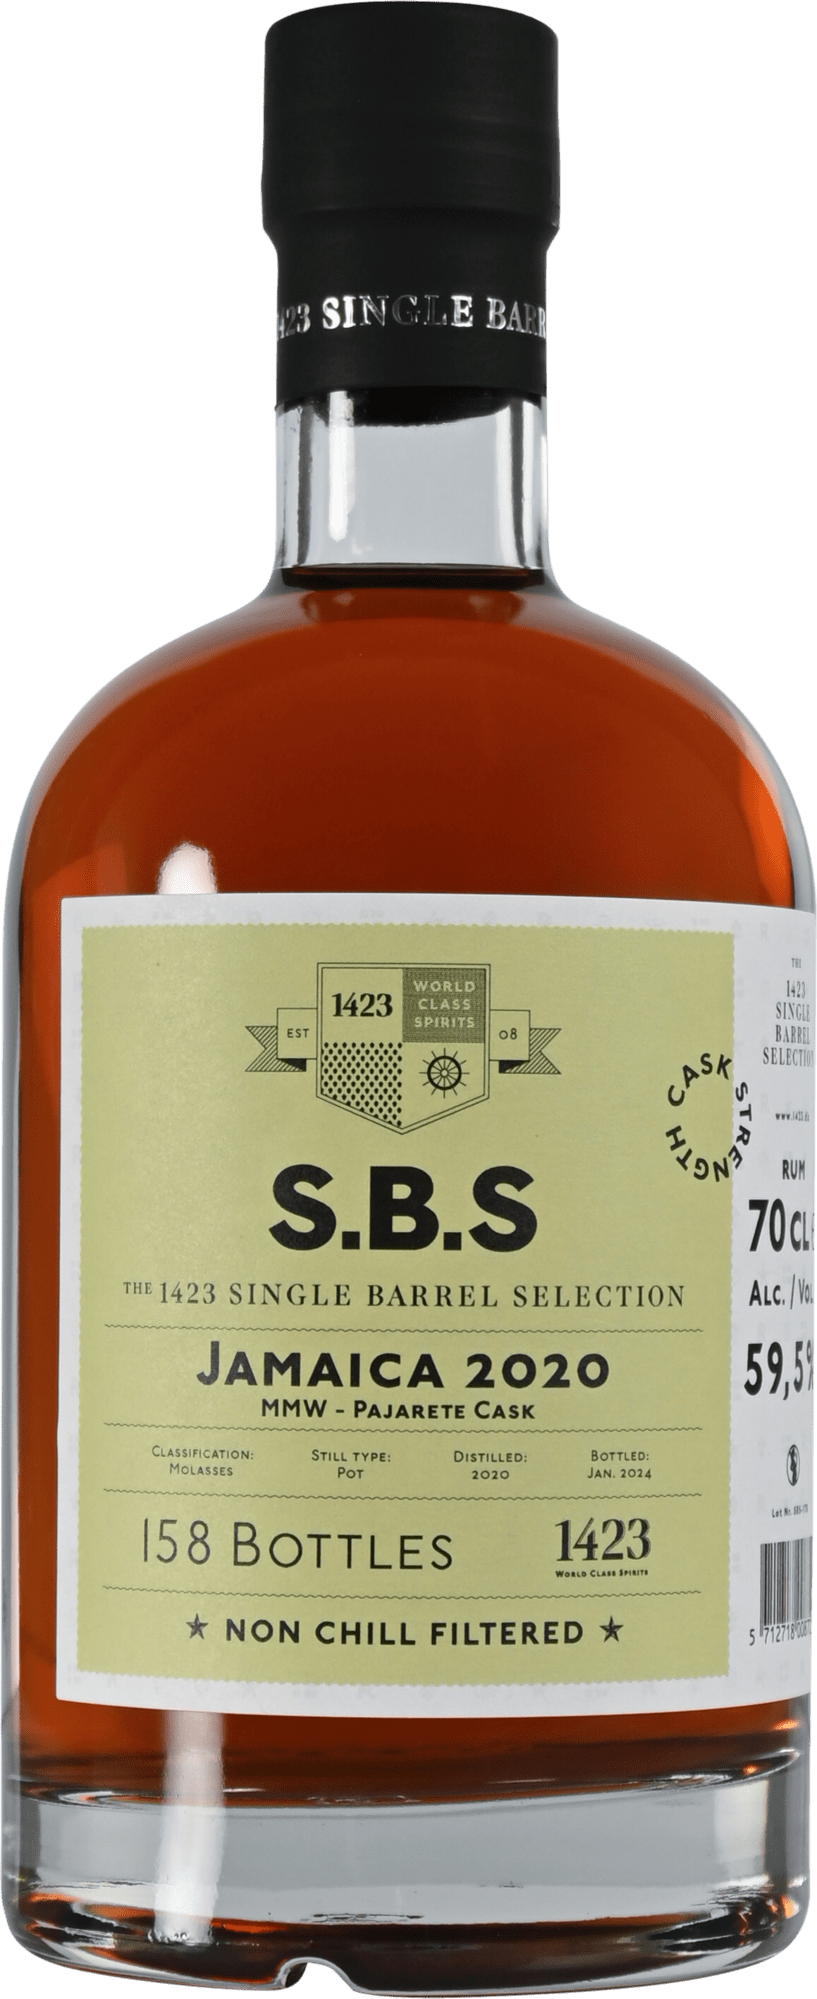 S.B.S Jamaica 2020 MMW Clarendon, GIFT